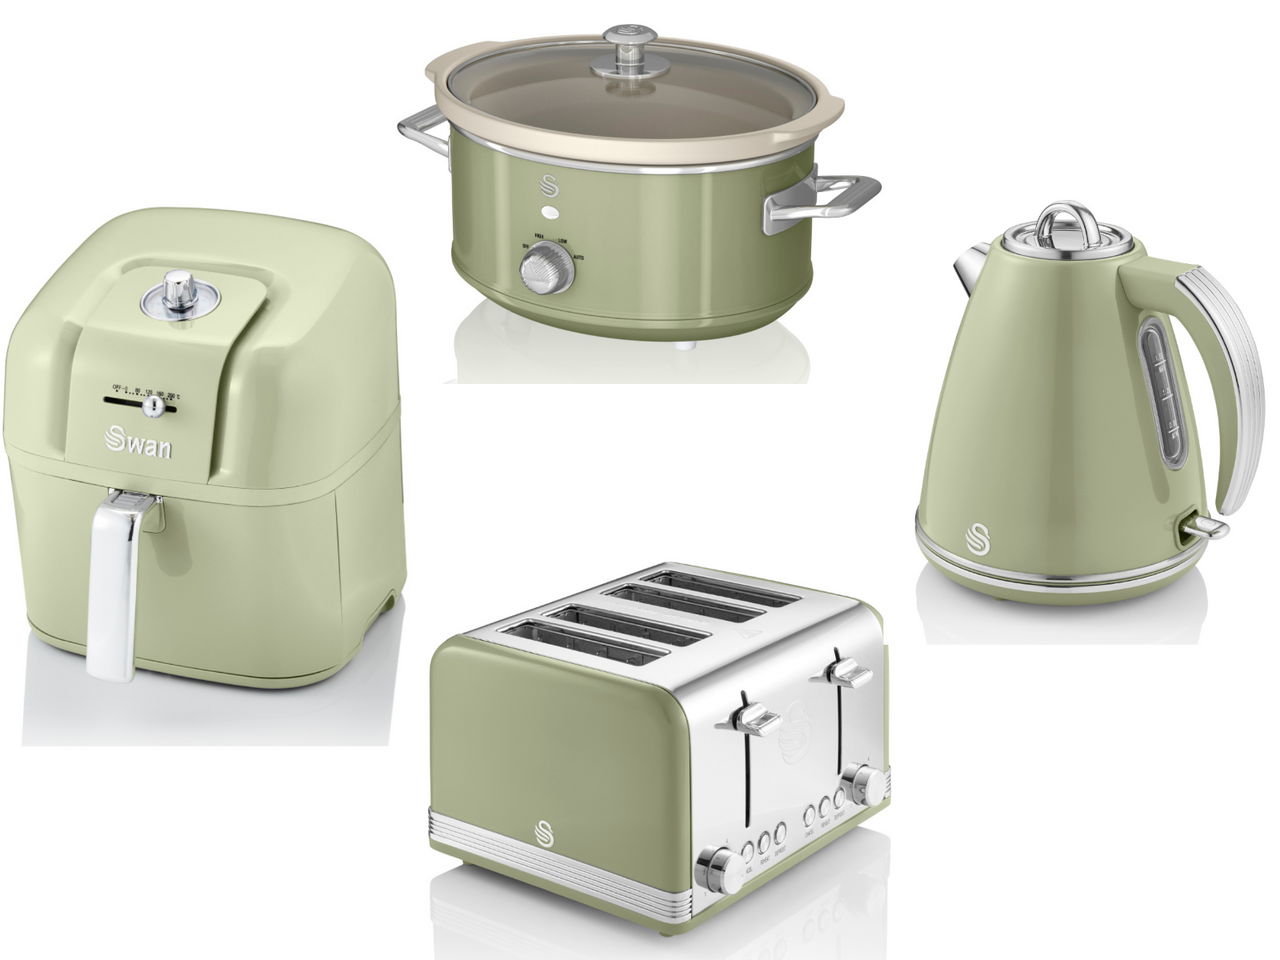 SWAN Retro Green Jug Kettle Toaster 6L Air Fryer & 3.5L Slow Cooker Kitchen Set